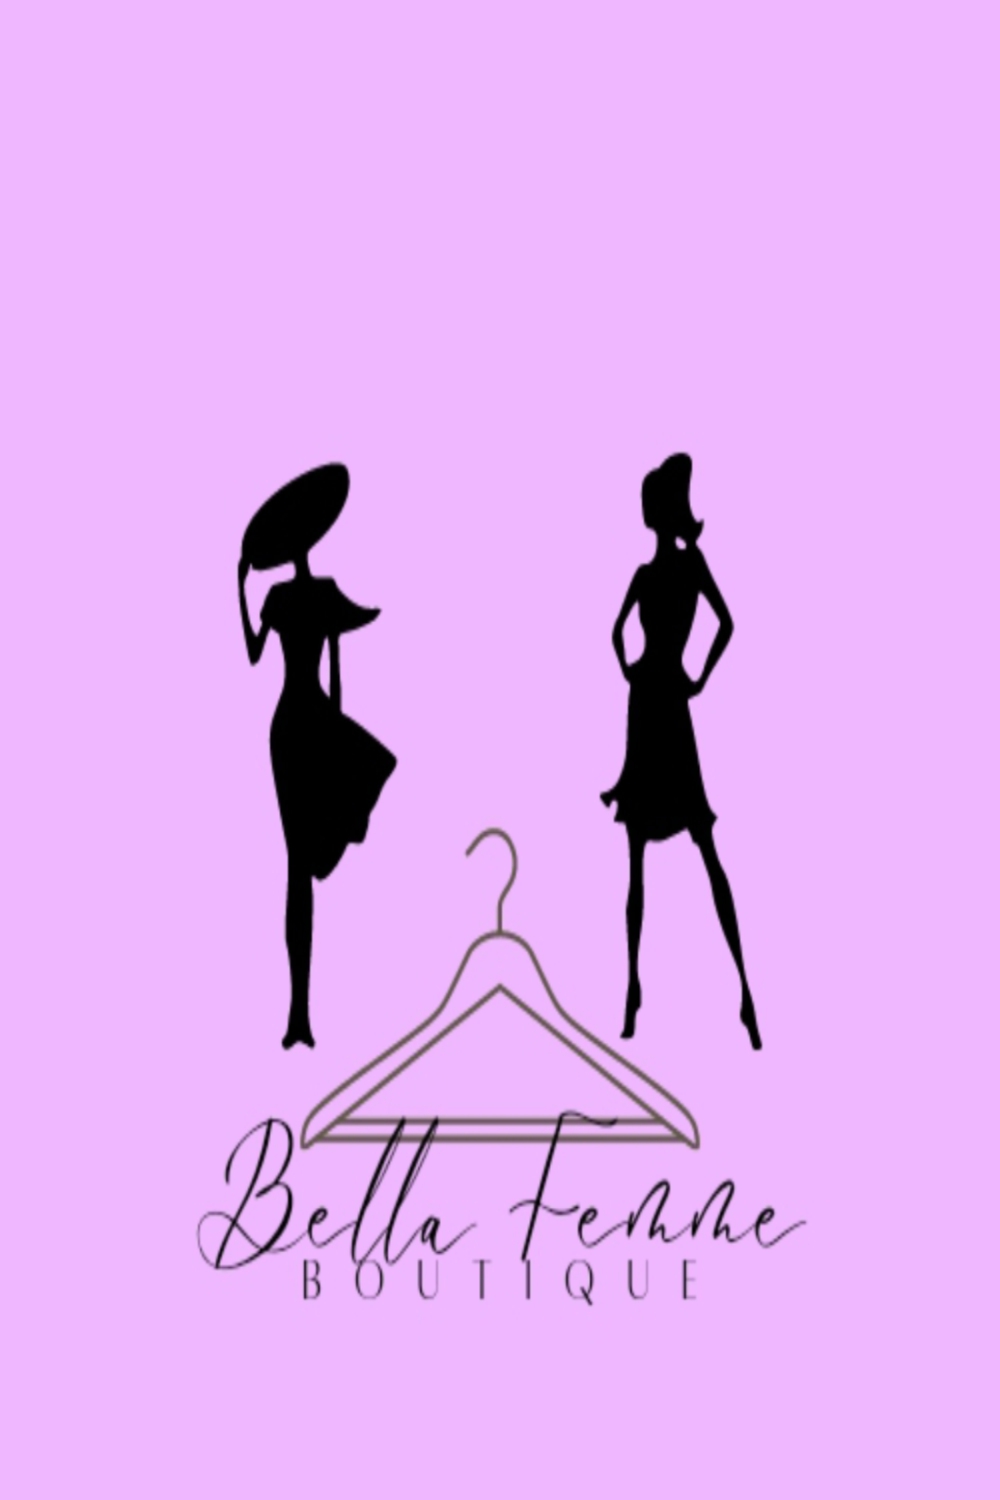 Belle Femme pinterest preview image.